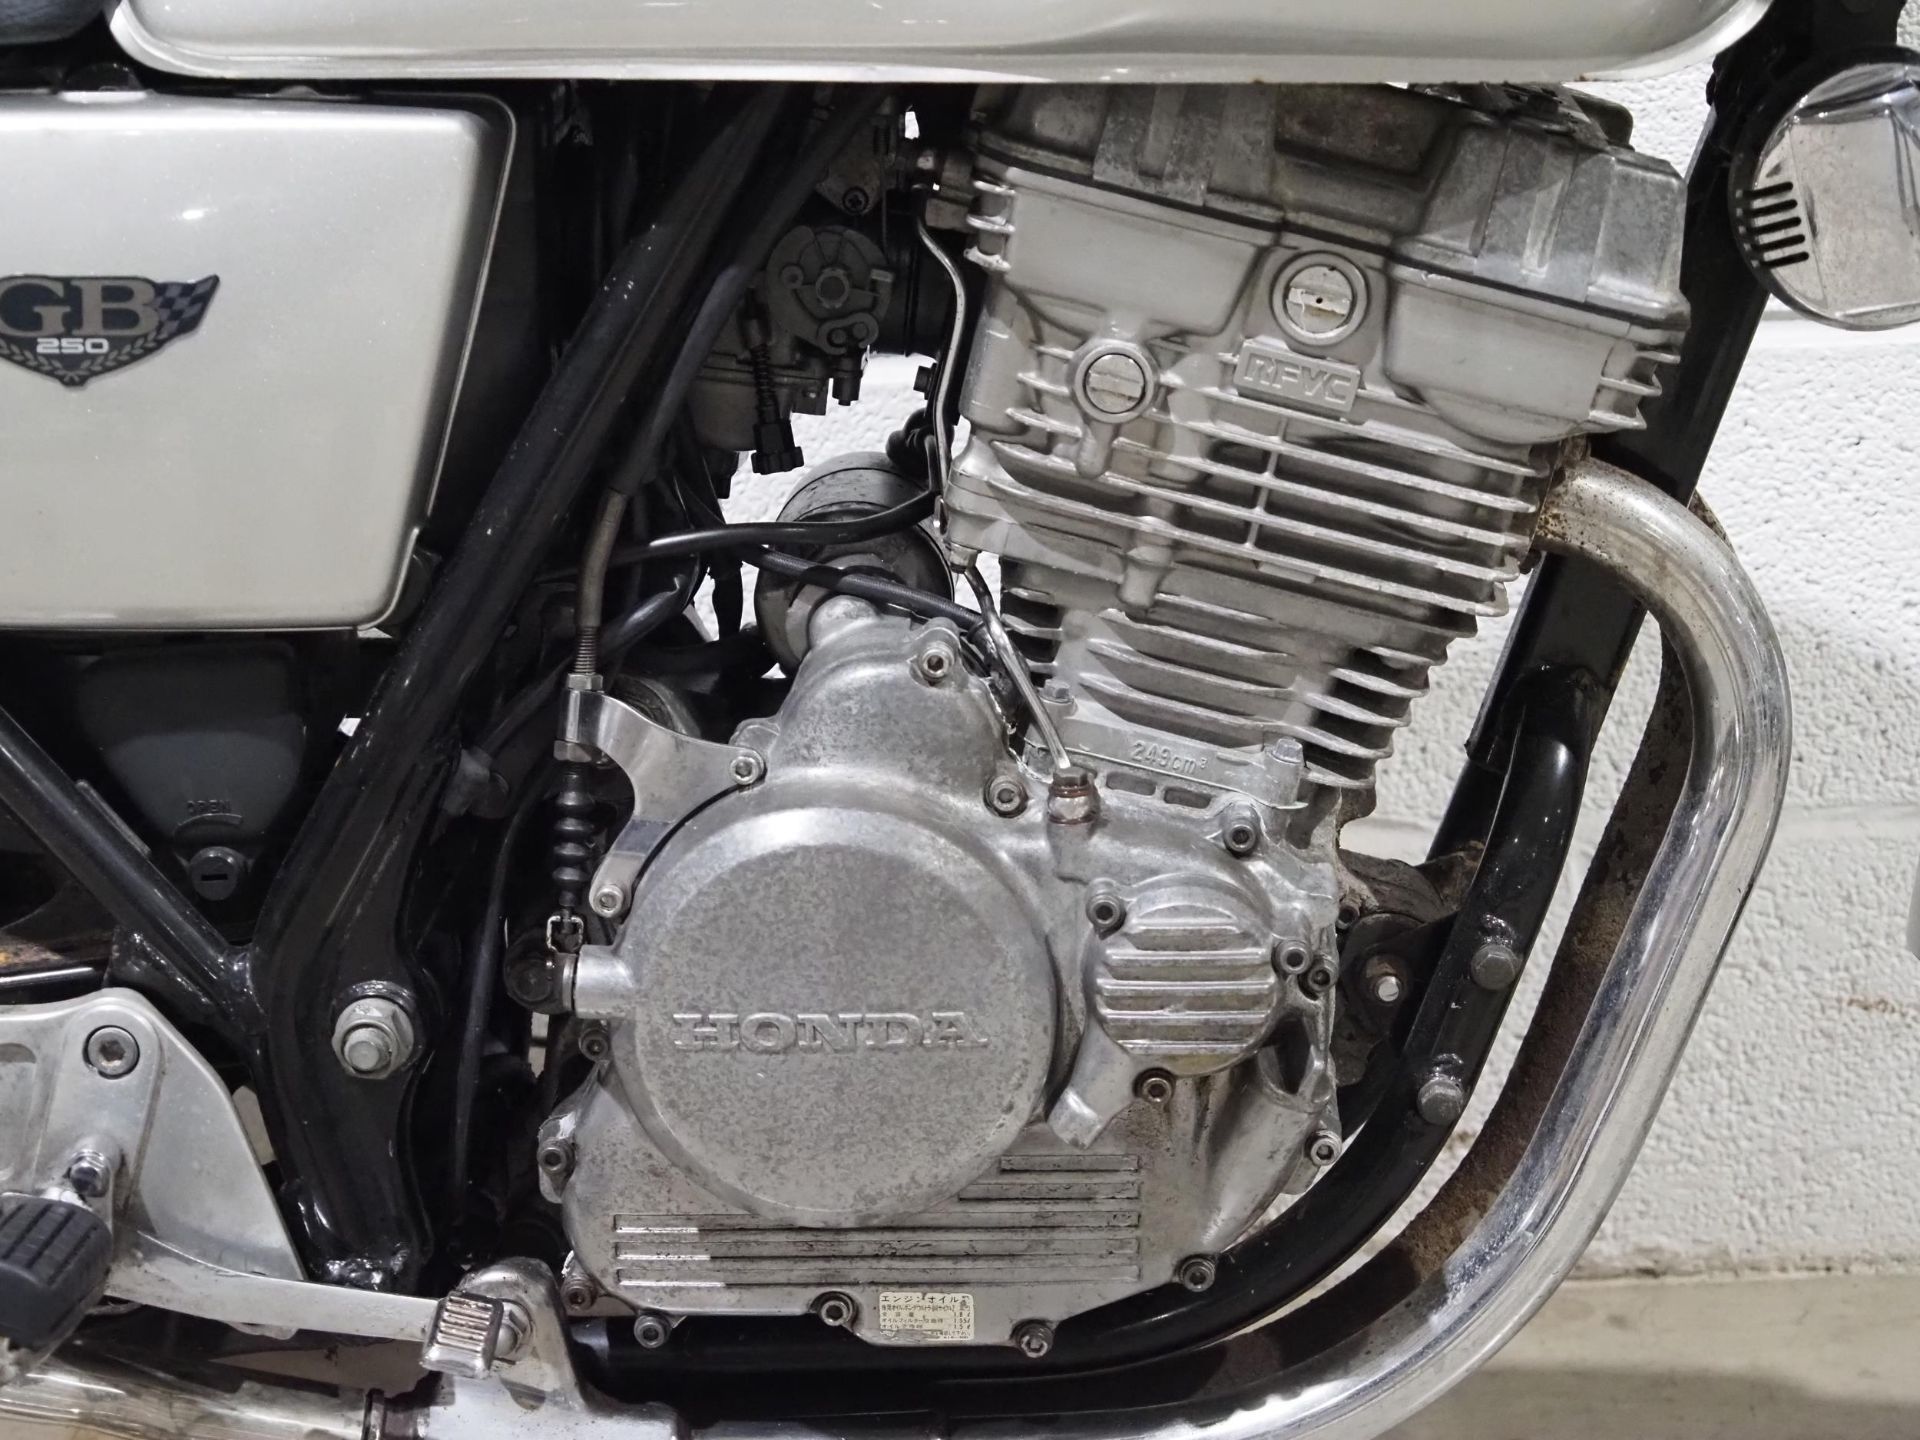 Honda Clubman GB250 motorcycle. 1985. 249cc. Frame No. MC10-1400792 Engine No. MC10E-1500494 Reg. - Image 4 of 6